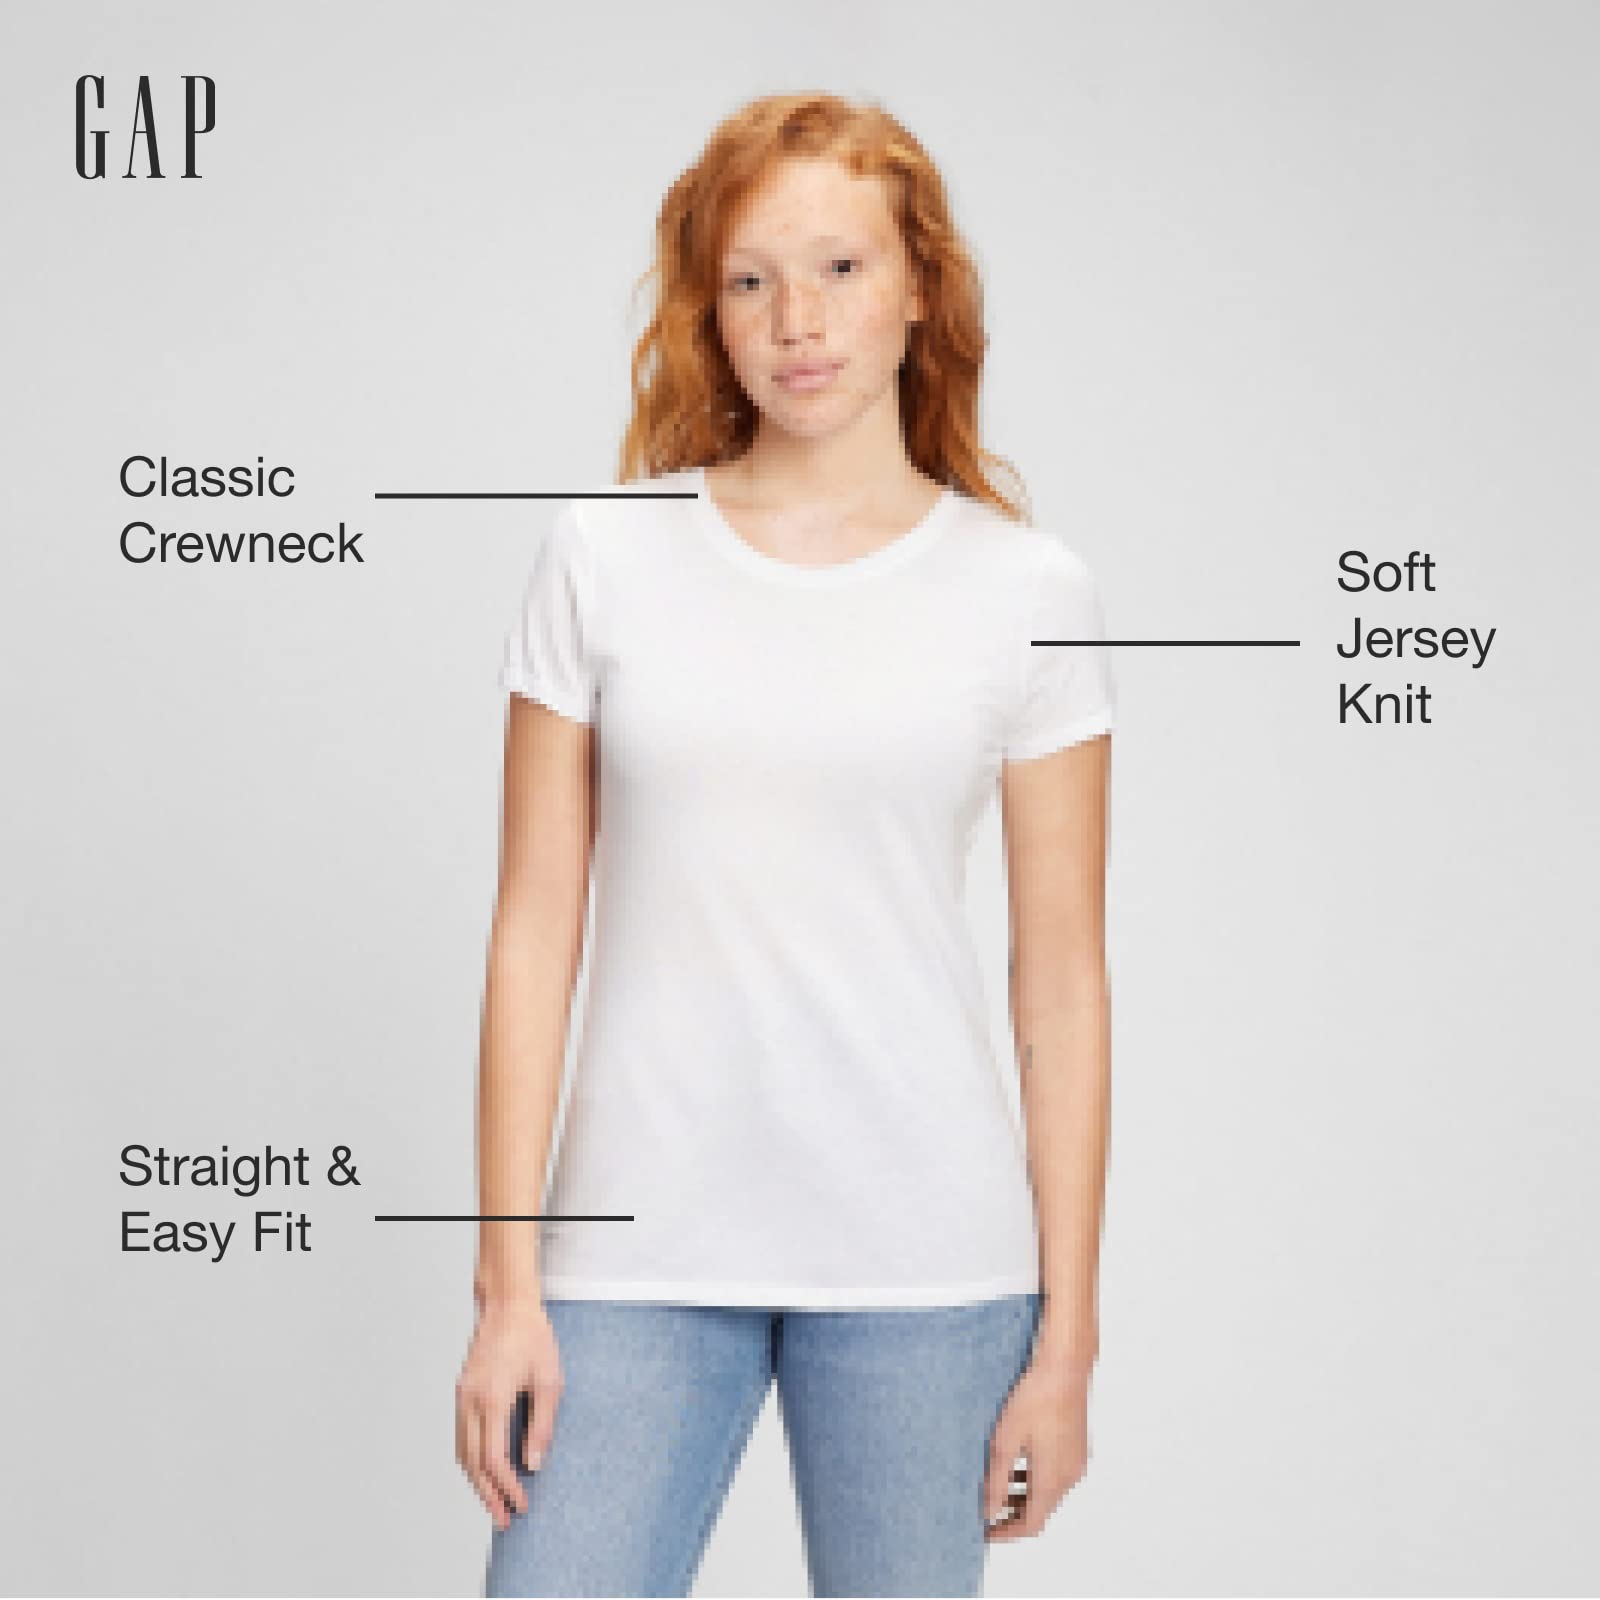 GAP Women's 2-Pack Crewneck Favorite Tee T-Shirt